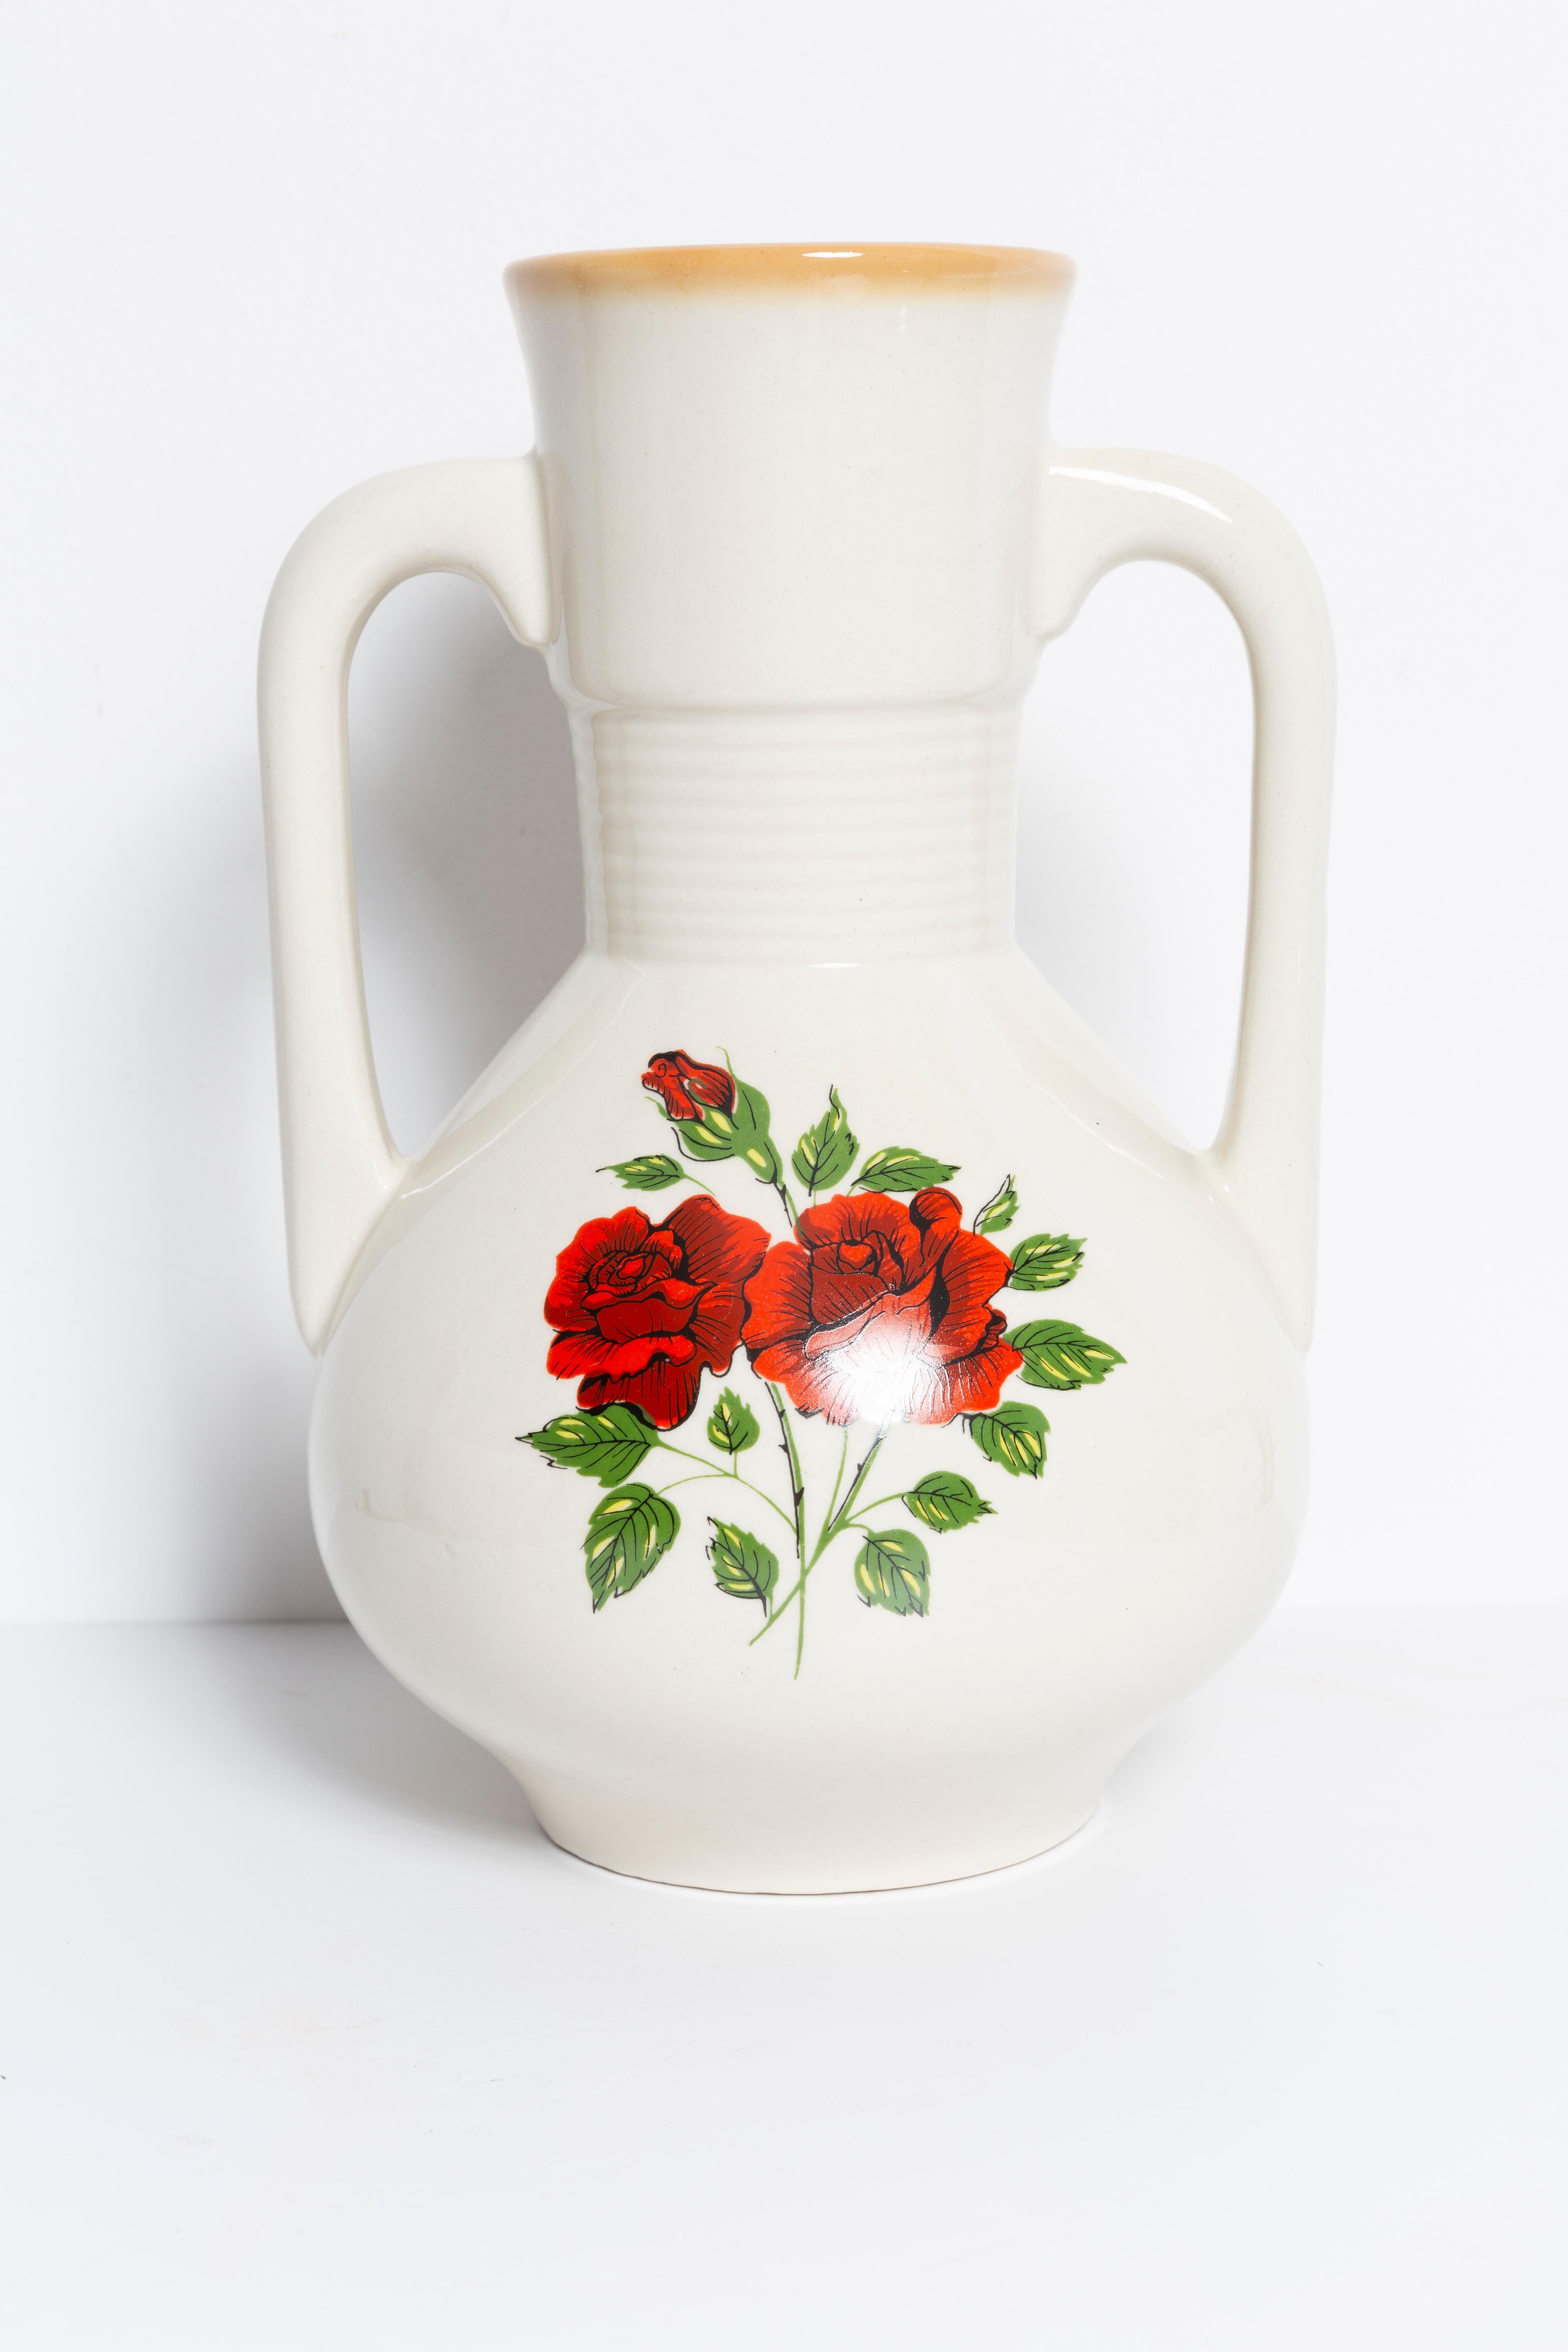 Mid Century Vintage Rose Big Porzellan Keramik Vase, Europa, 1960er Jahre (20. Jahrhundert) im Angebot